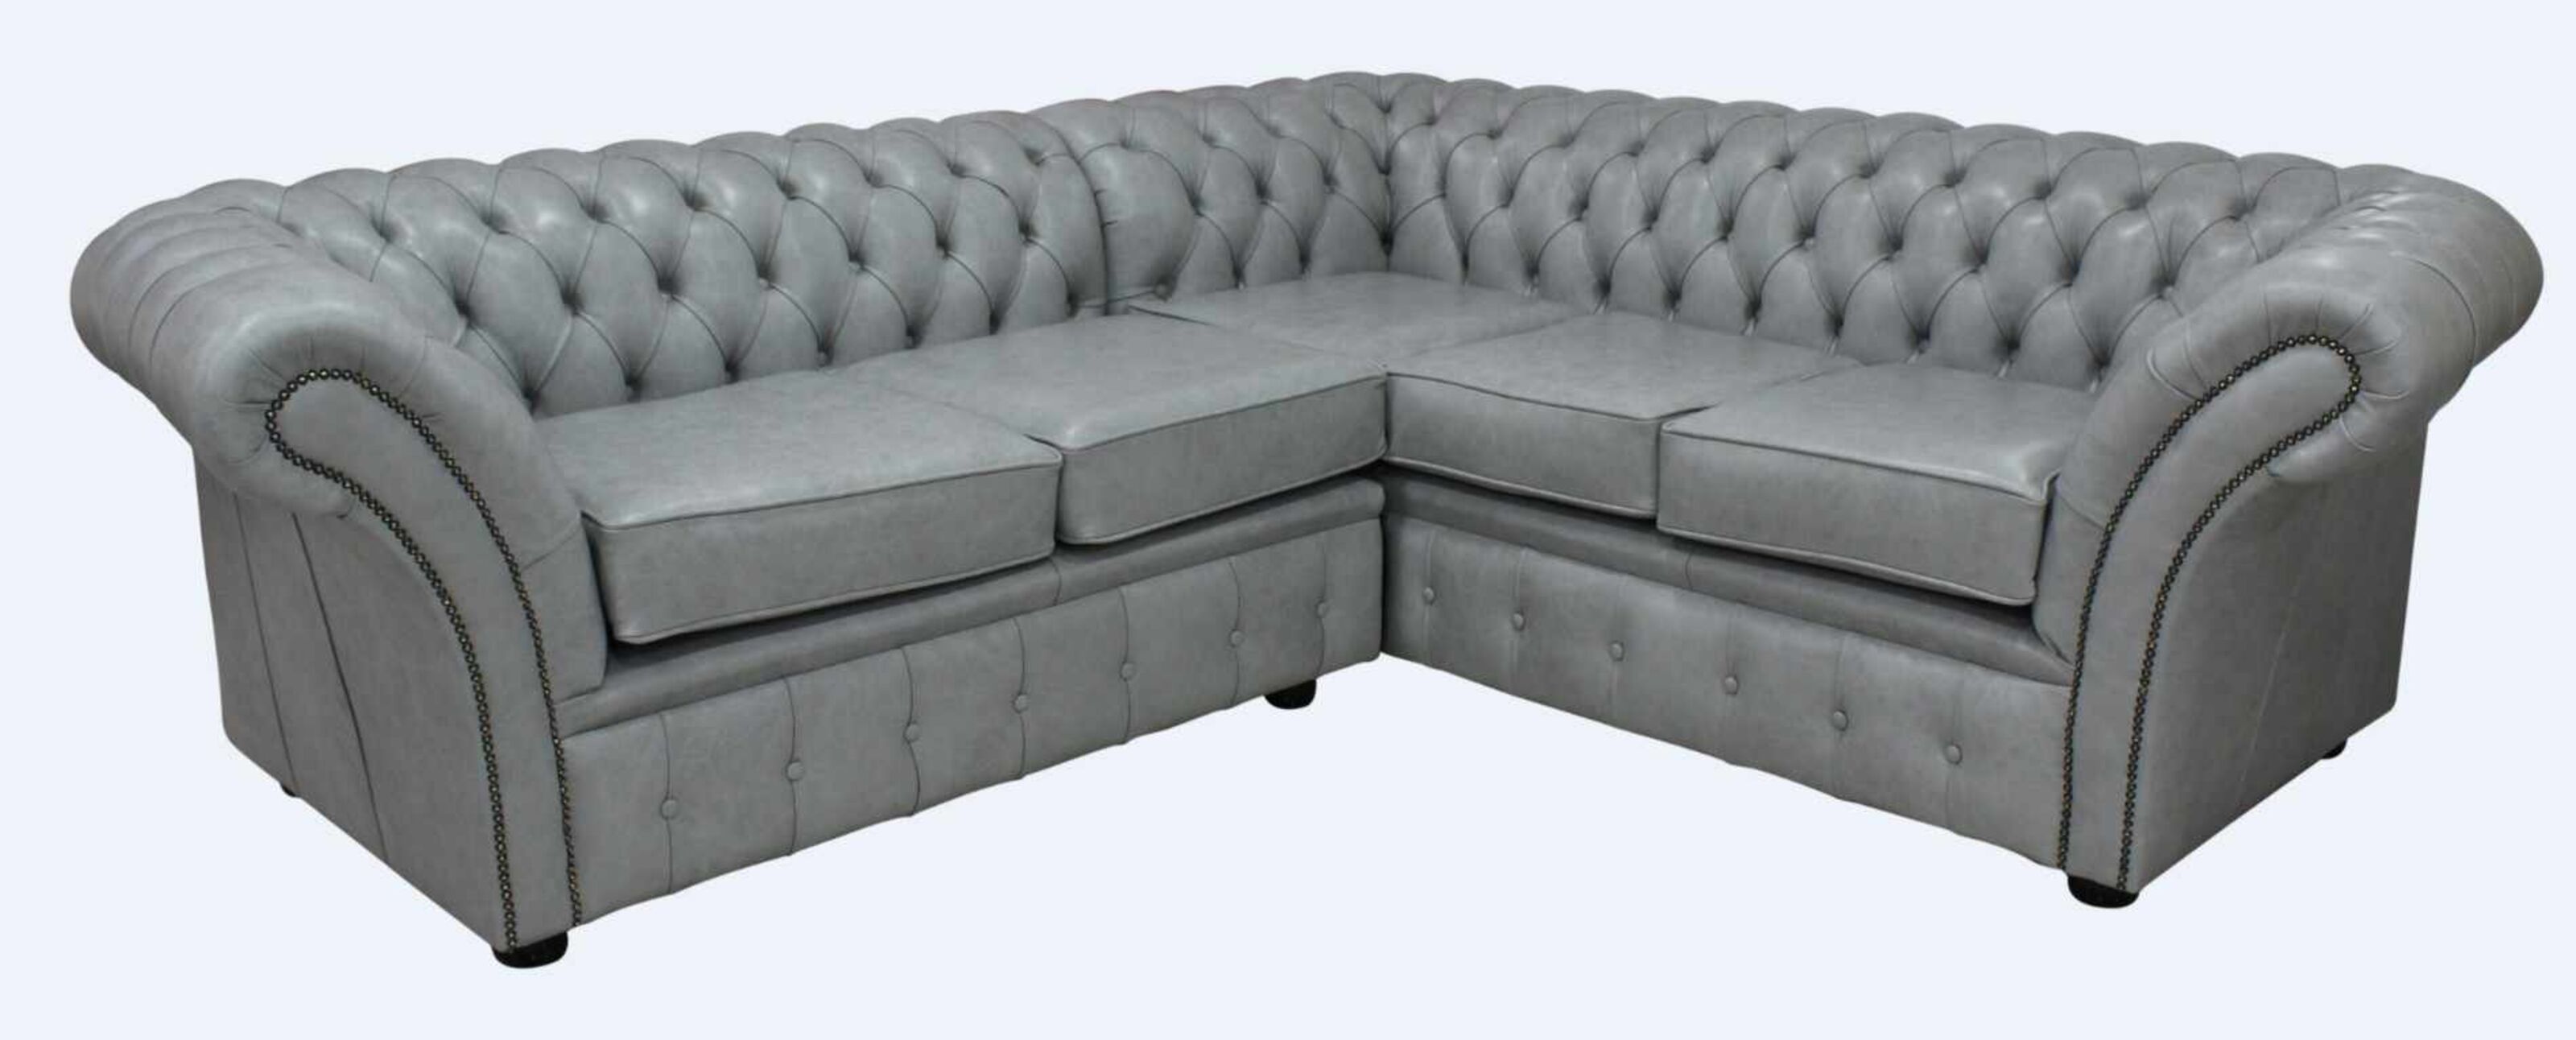 Corner Elegance Stylish Chesterfield Sofa Solutions  %Post Title